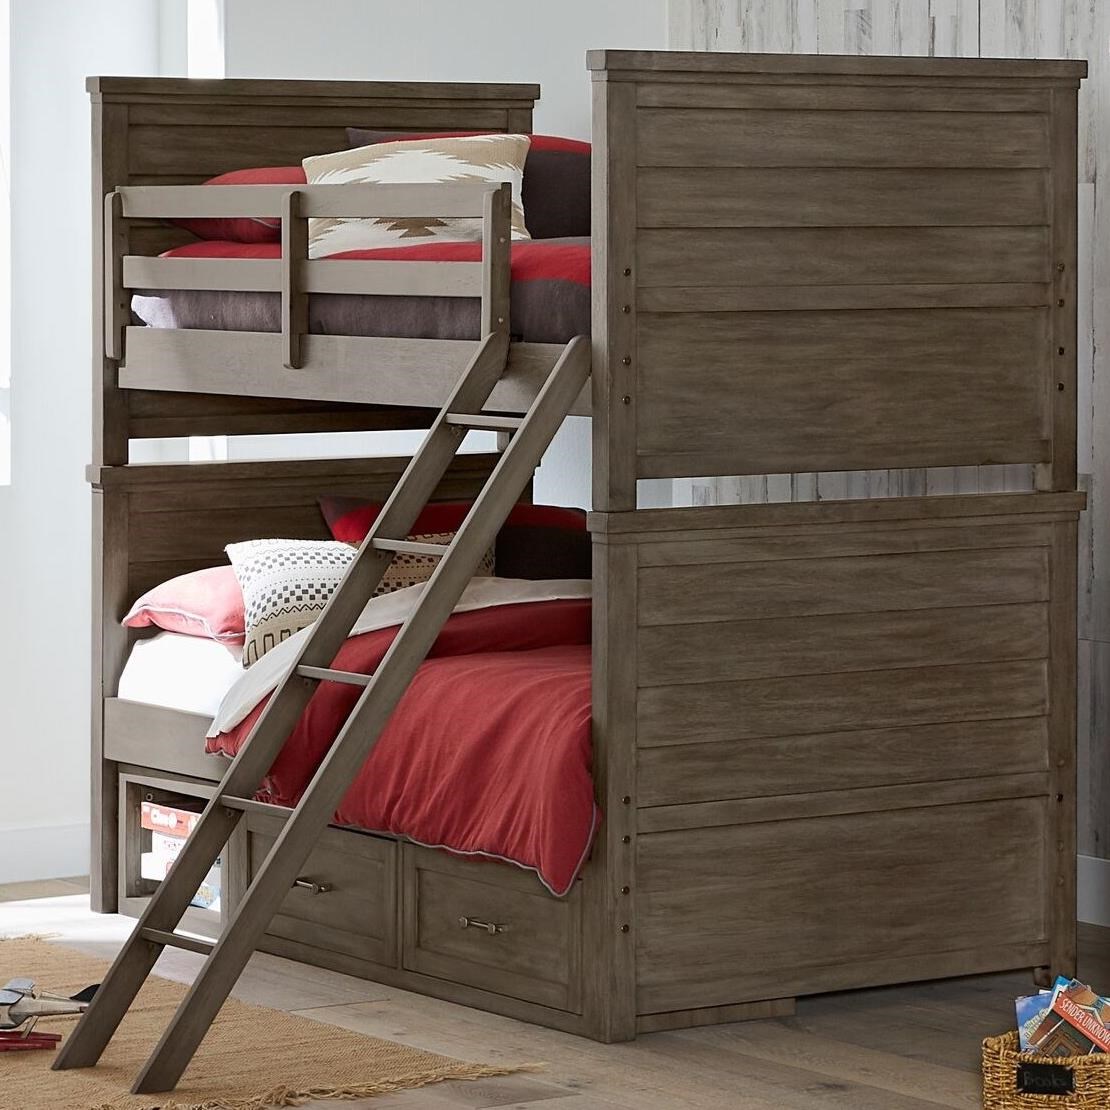 metal bunk bed with storage